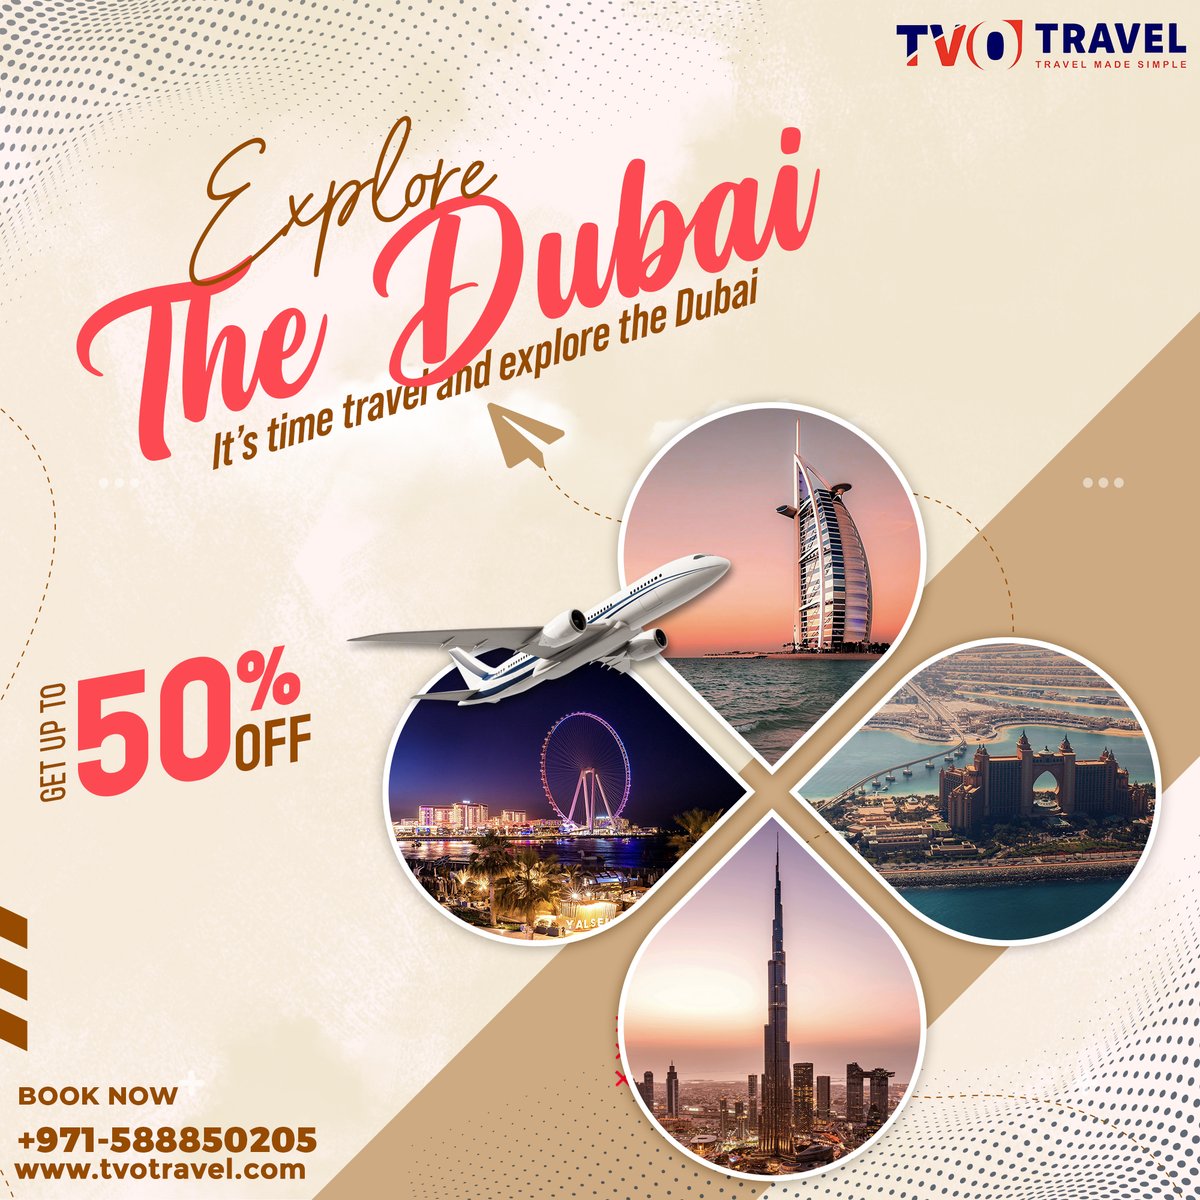 Discover Dubai with 50% Off: TVO Travel Special!

tvotravel.com
#exploredubai #TVOTravelDeals #DubaiAdventures #wanderlust #travelgoals #discountedtravel #ExploreMoreForLess #TVOTravelOffers #DubaiDreams #50percentoff #Discoverwithtvo #DubaiExperience #exploretheworld